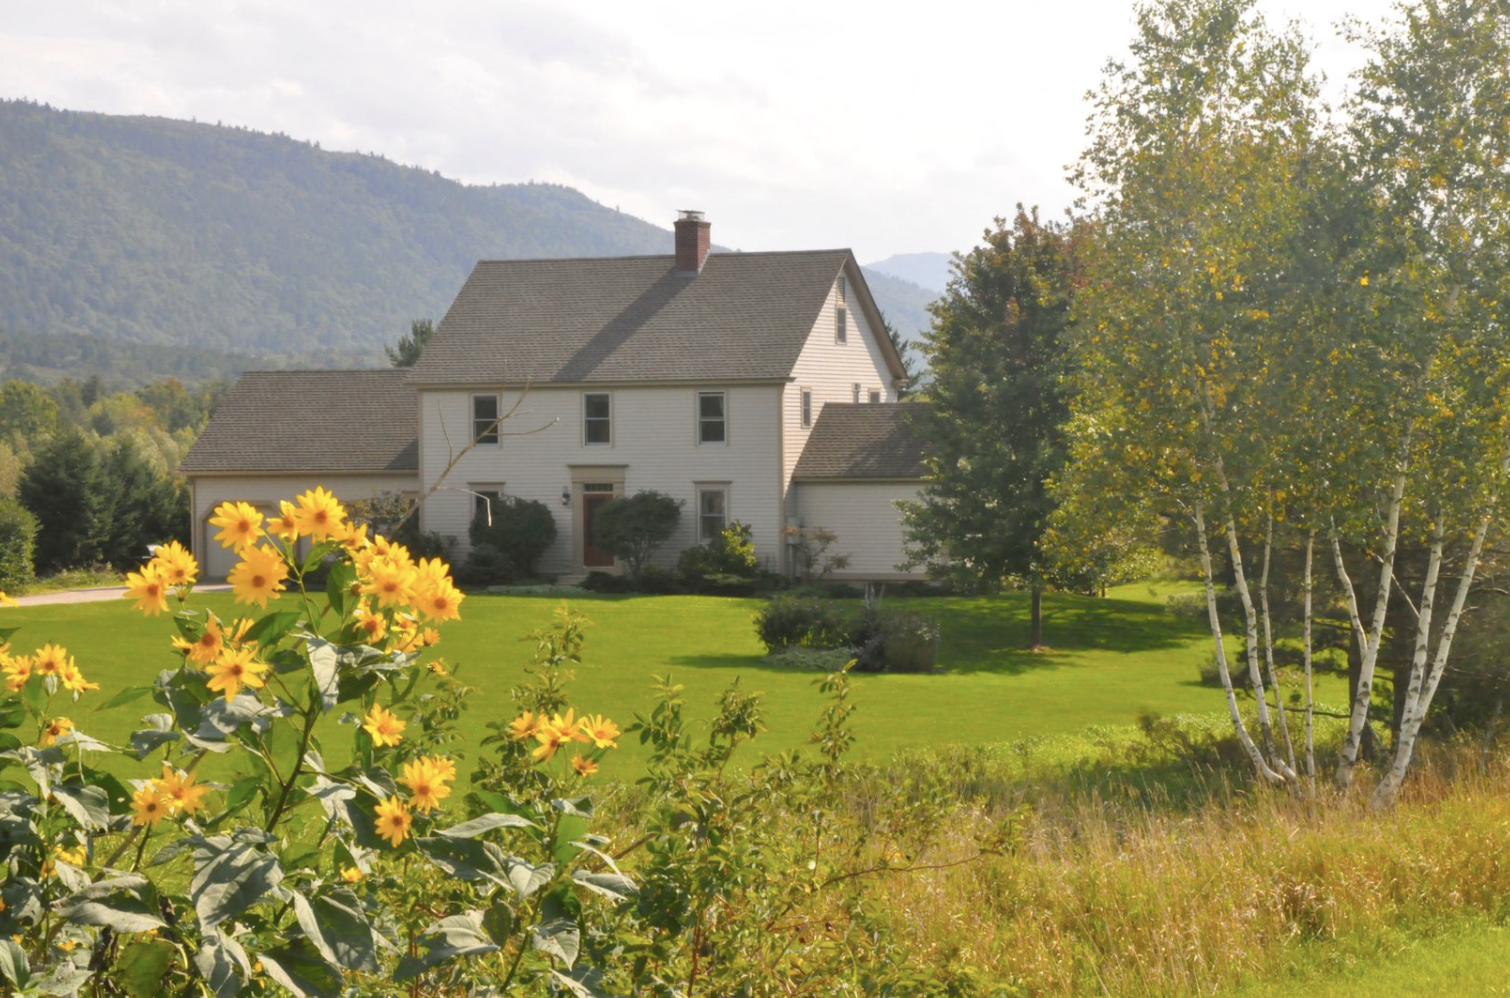 Plan an affordable leaf peeping getaway in Vermont with HomeExchange